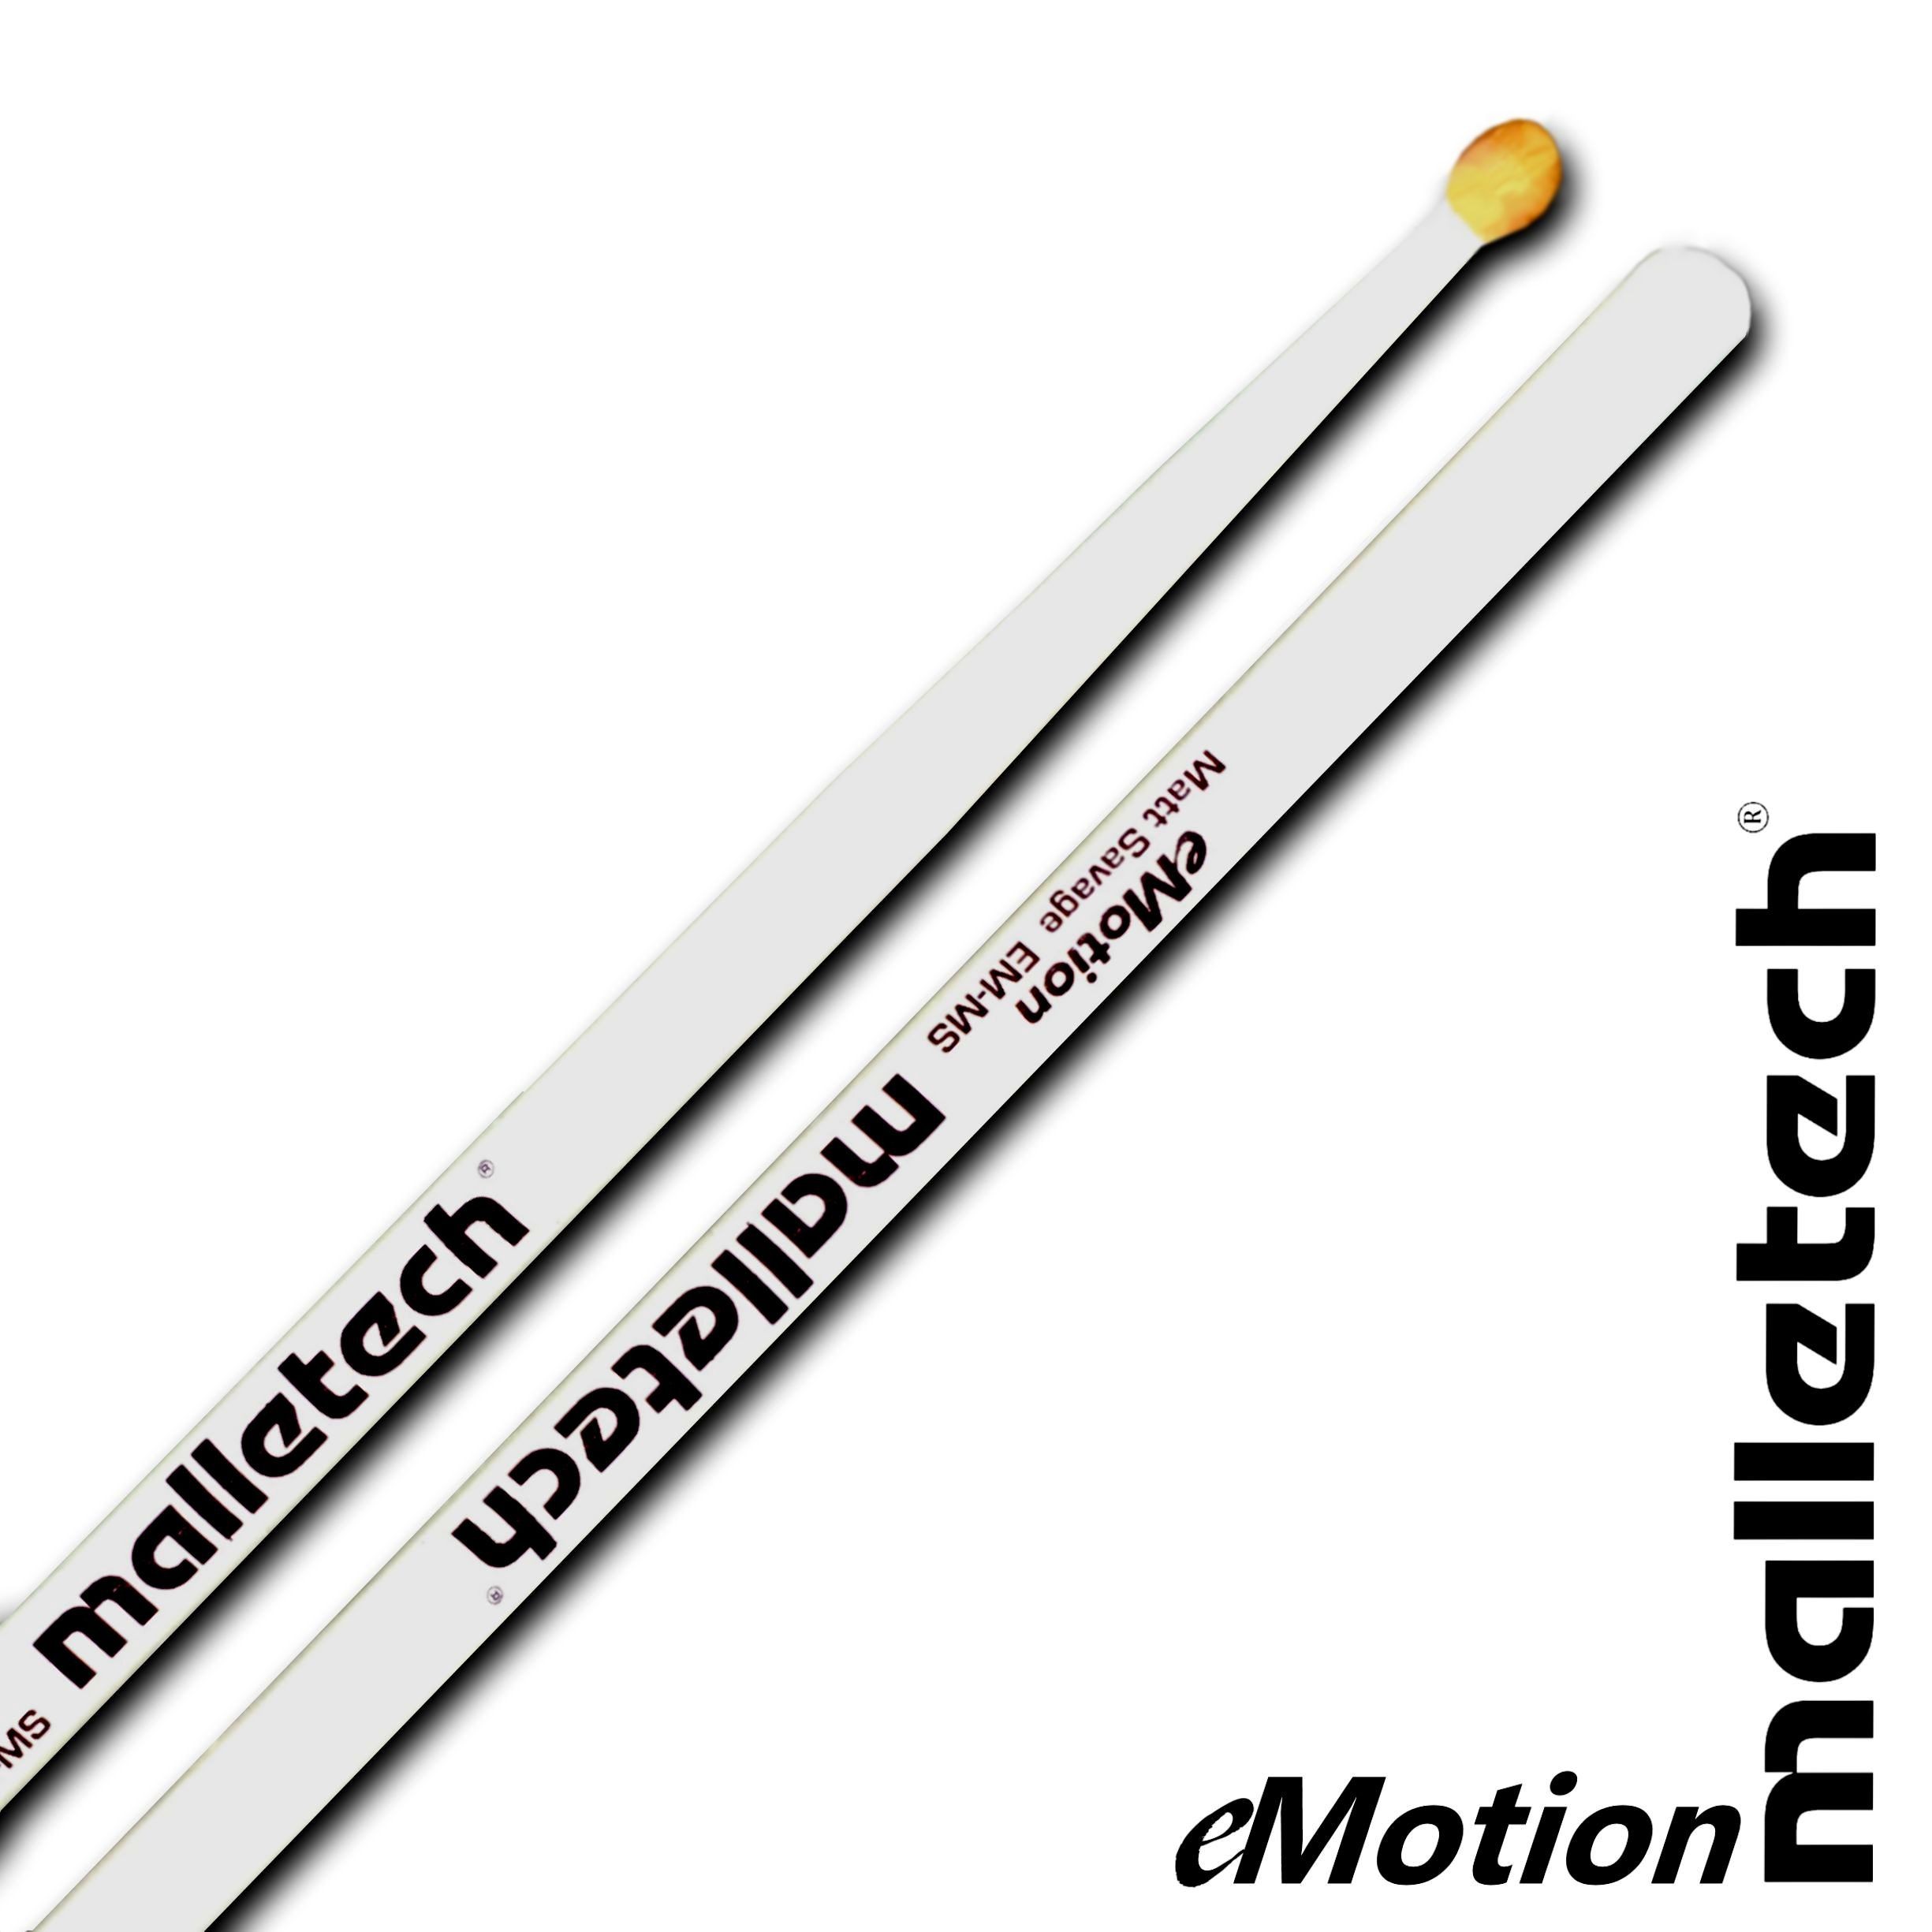 Malletech EM-MS eMotion Matt Savage Signature Snare Drum Sticks